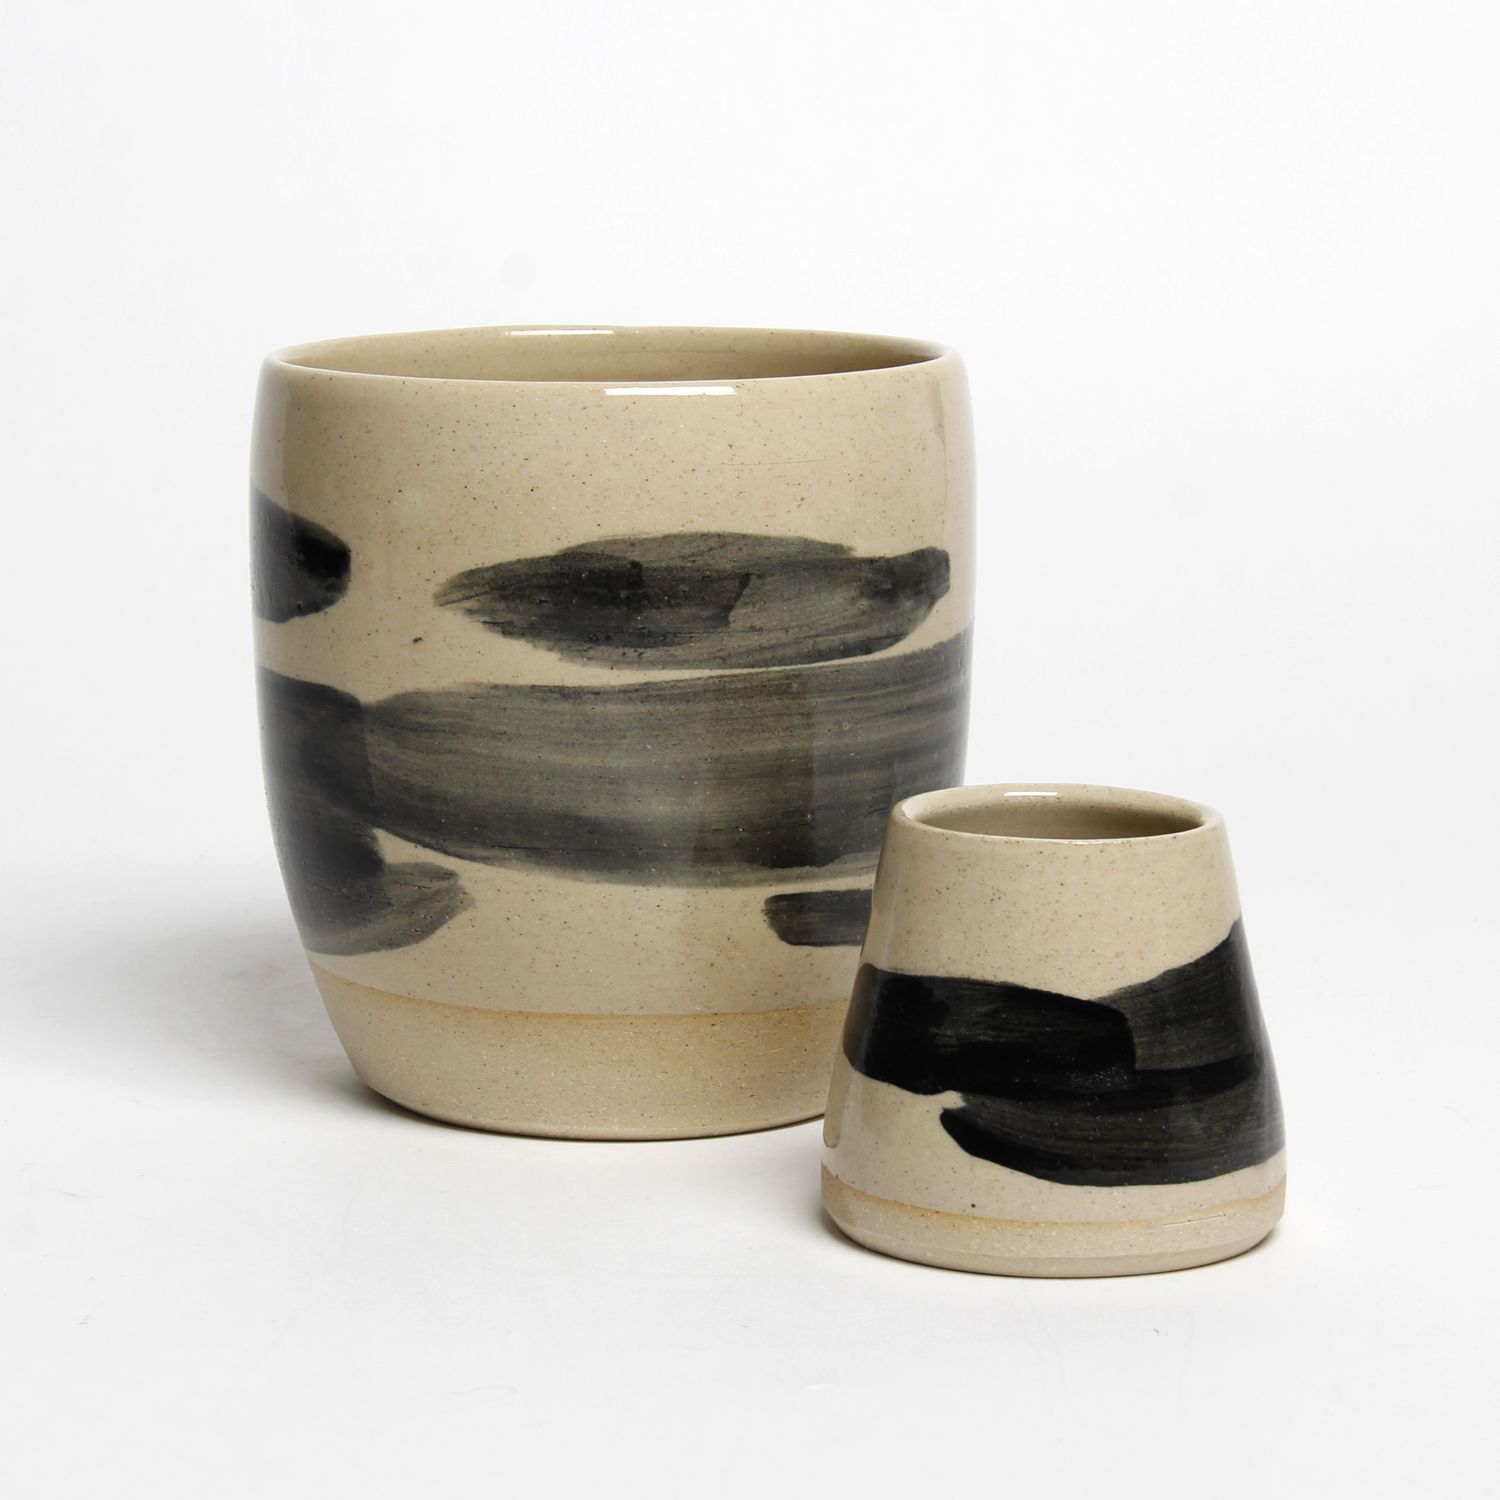 Suzanne Morrissette: Painter’s Planter Vase Product Image 3 of 4